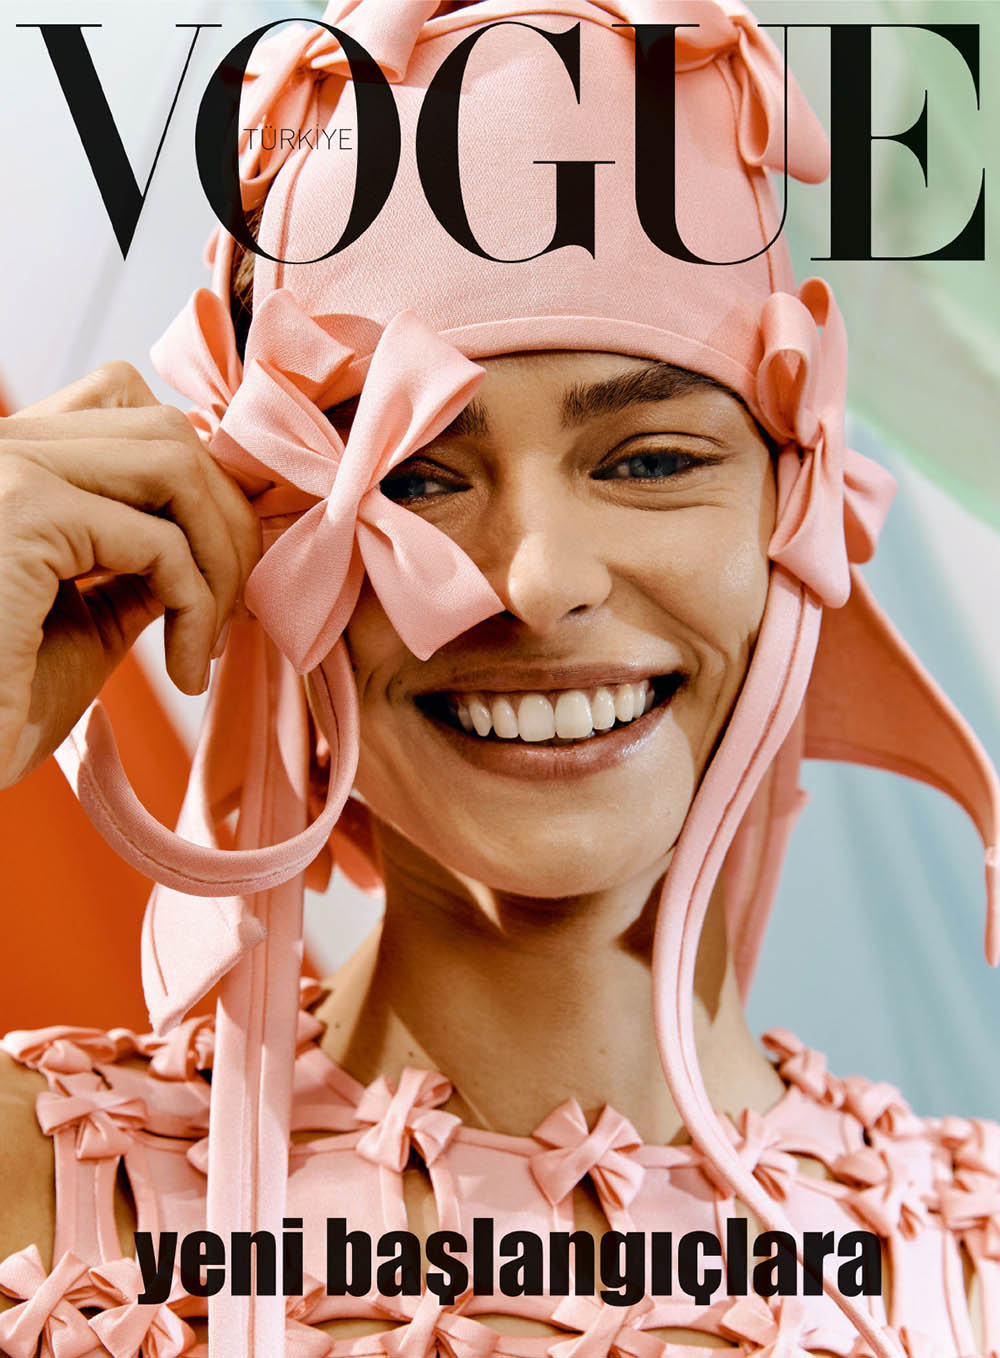 Birgit Kos covers Vogue Turkey December 2019 January 2020 by Agnes Lloyd-Platt